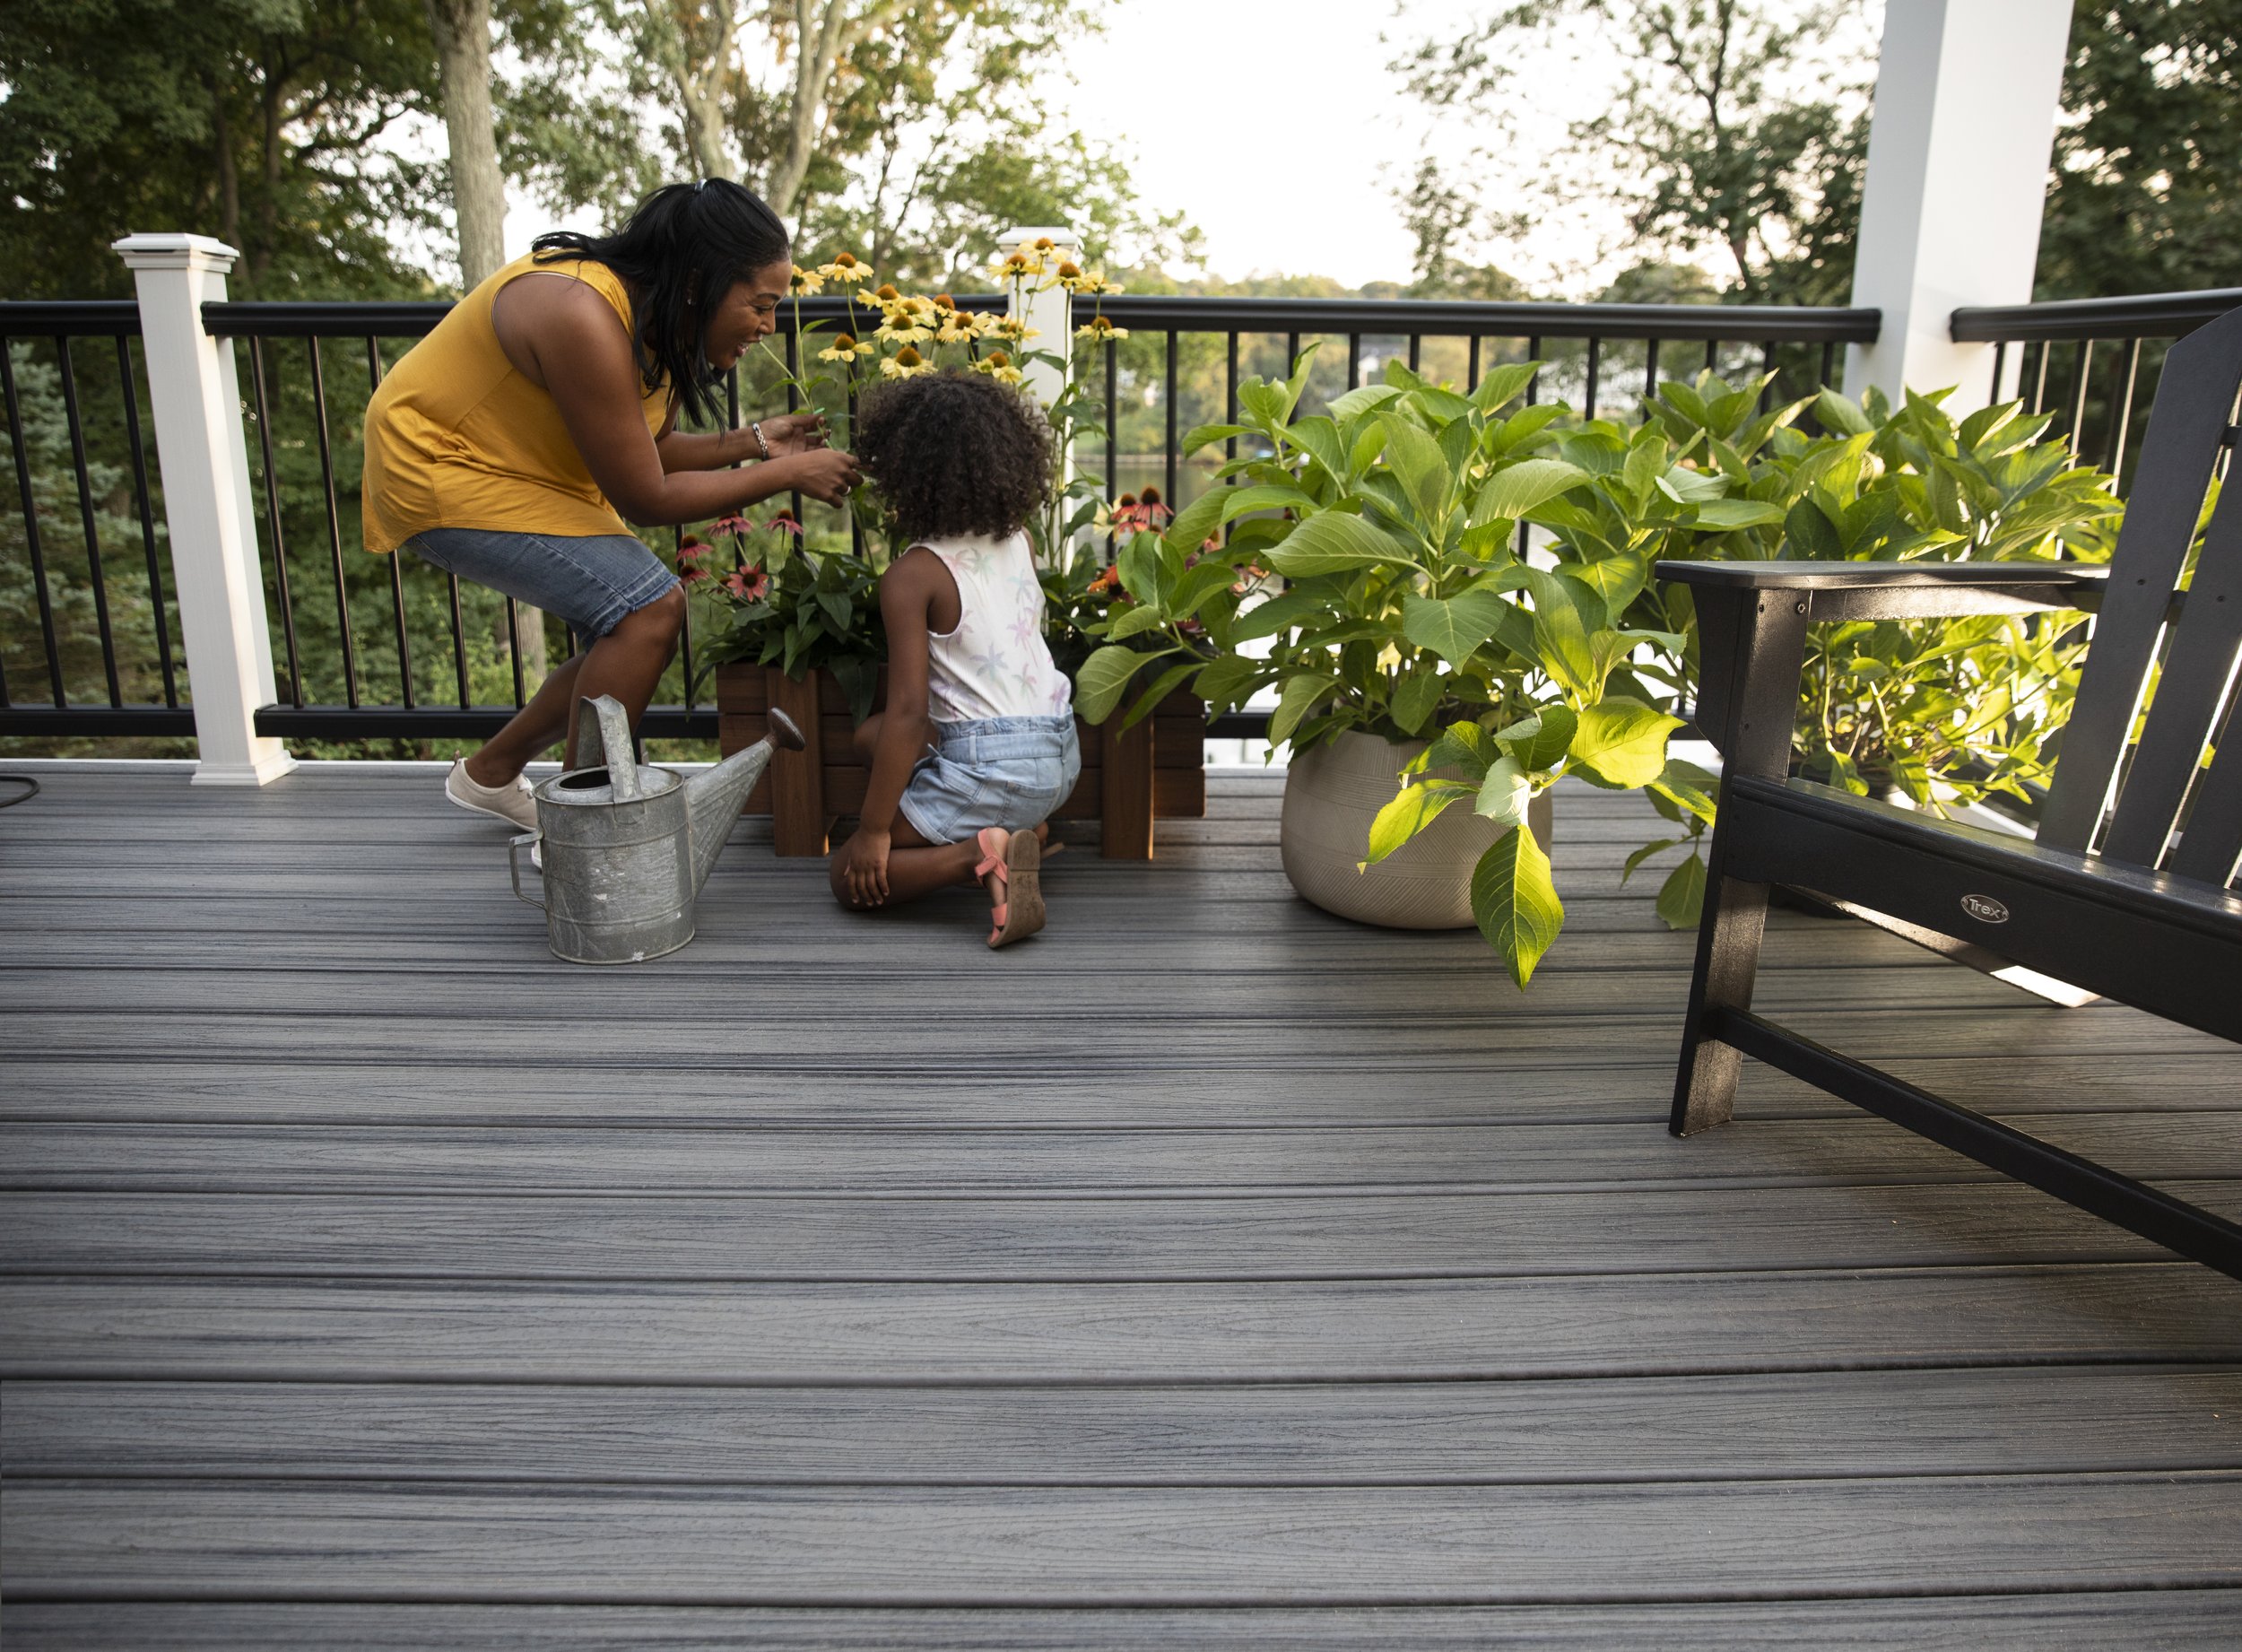 Trex Deck - Gardending Mom and Daughter.jpg